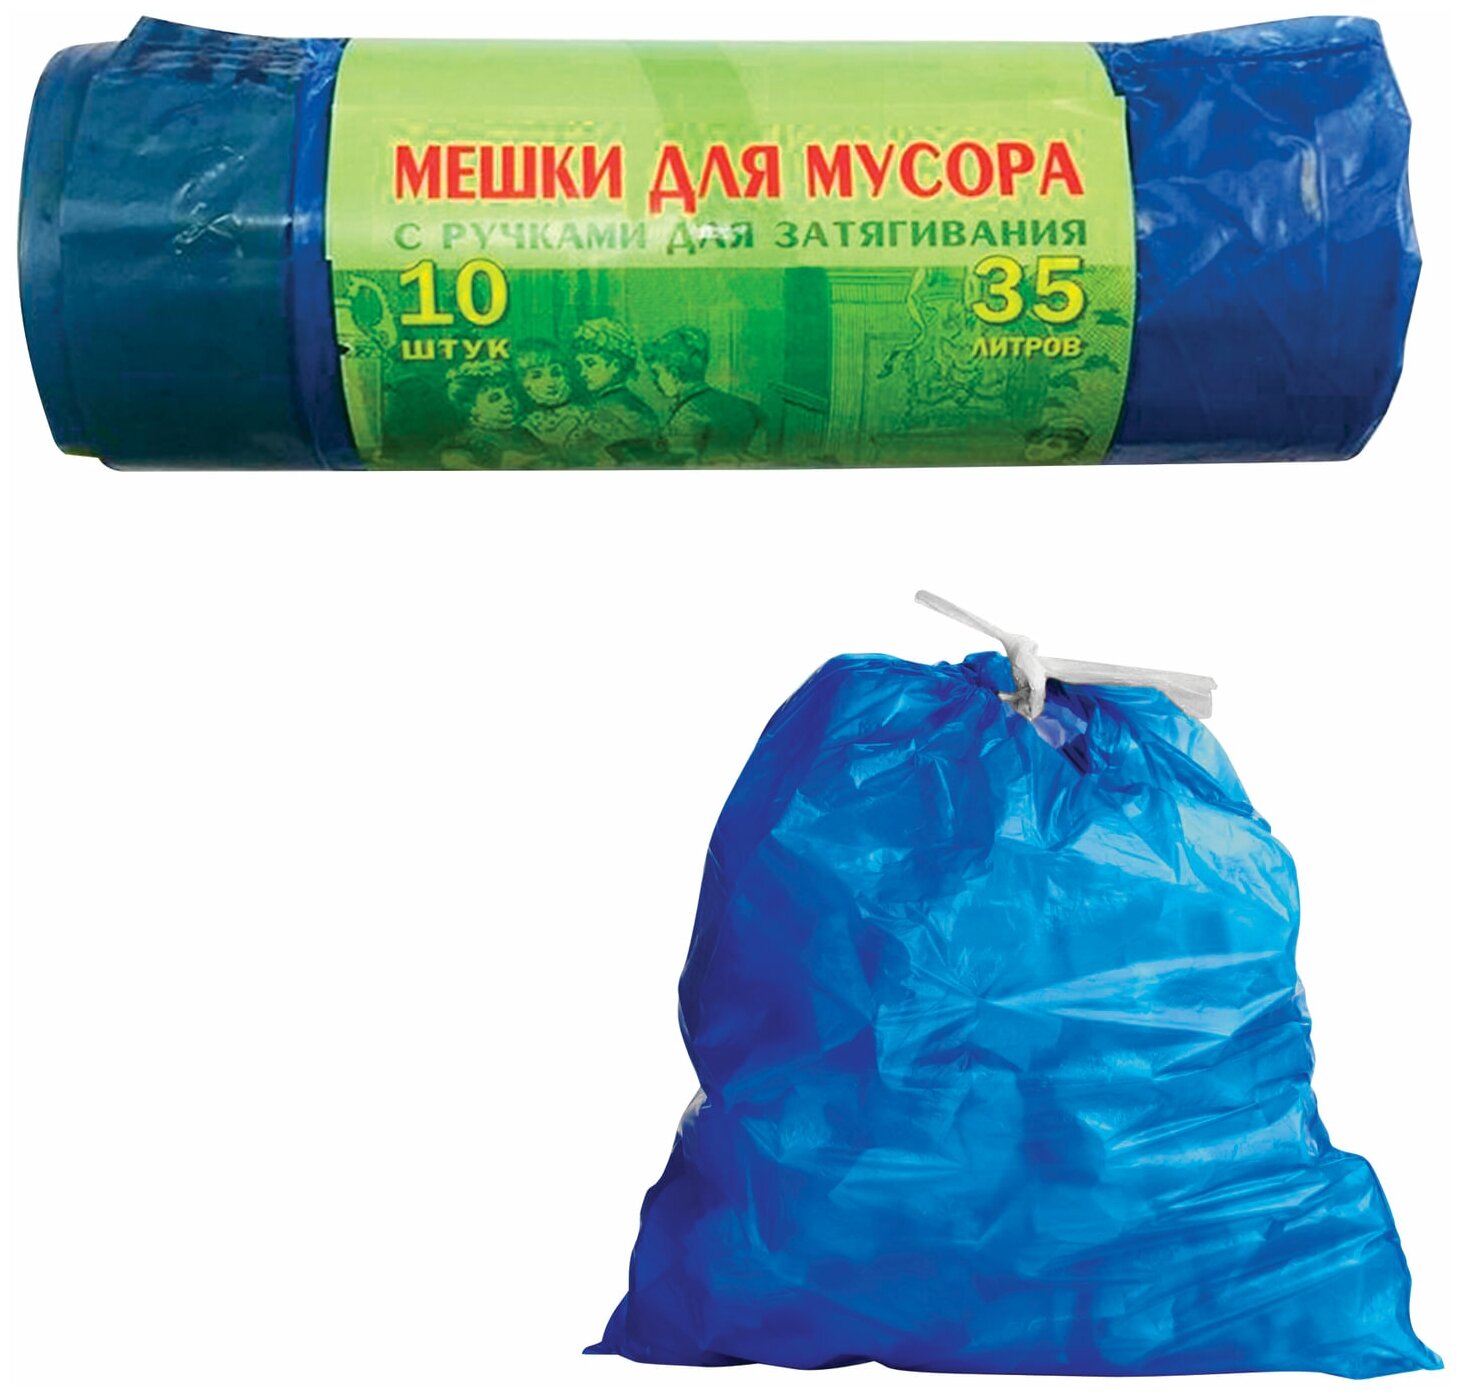 Мешки для мусора Концепция быта 35 л, завязки, синие, 10 шт, 25 мкм, 60х50 см, VITALUX (497)